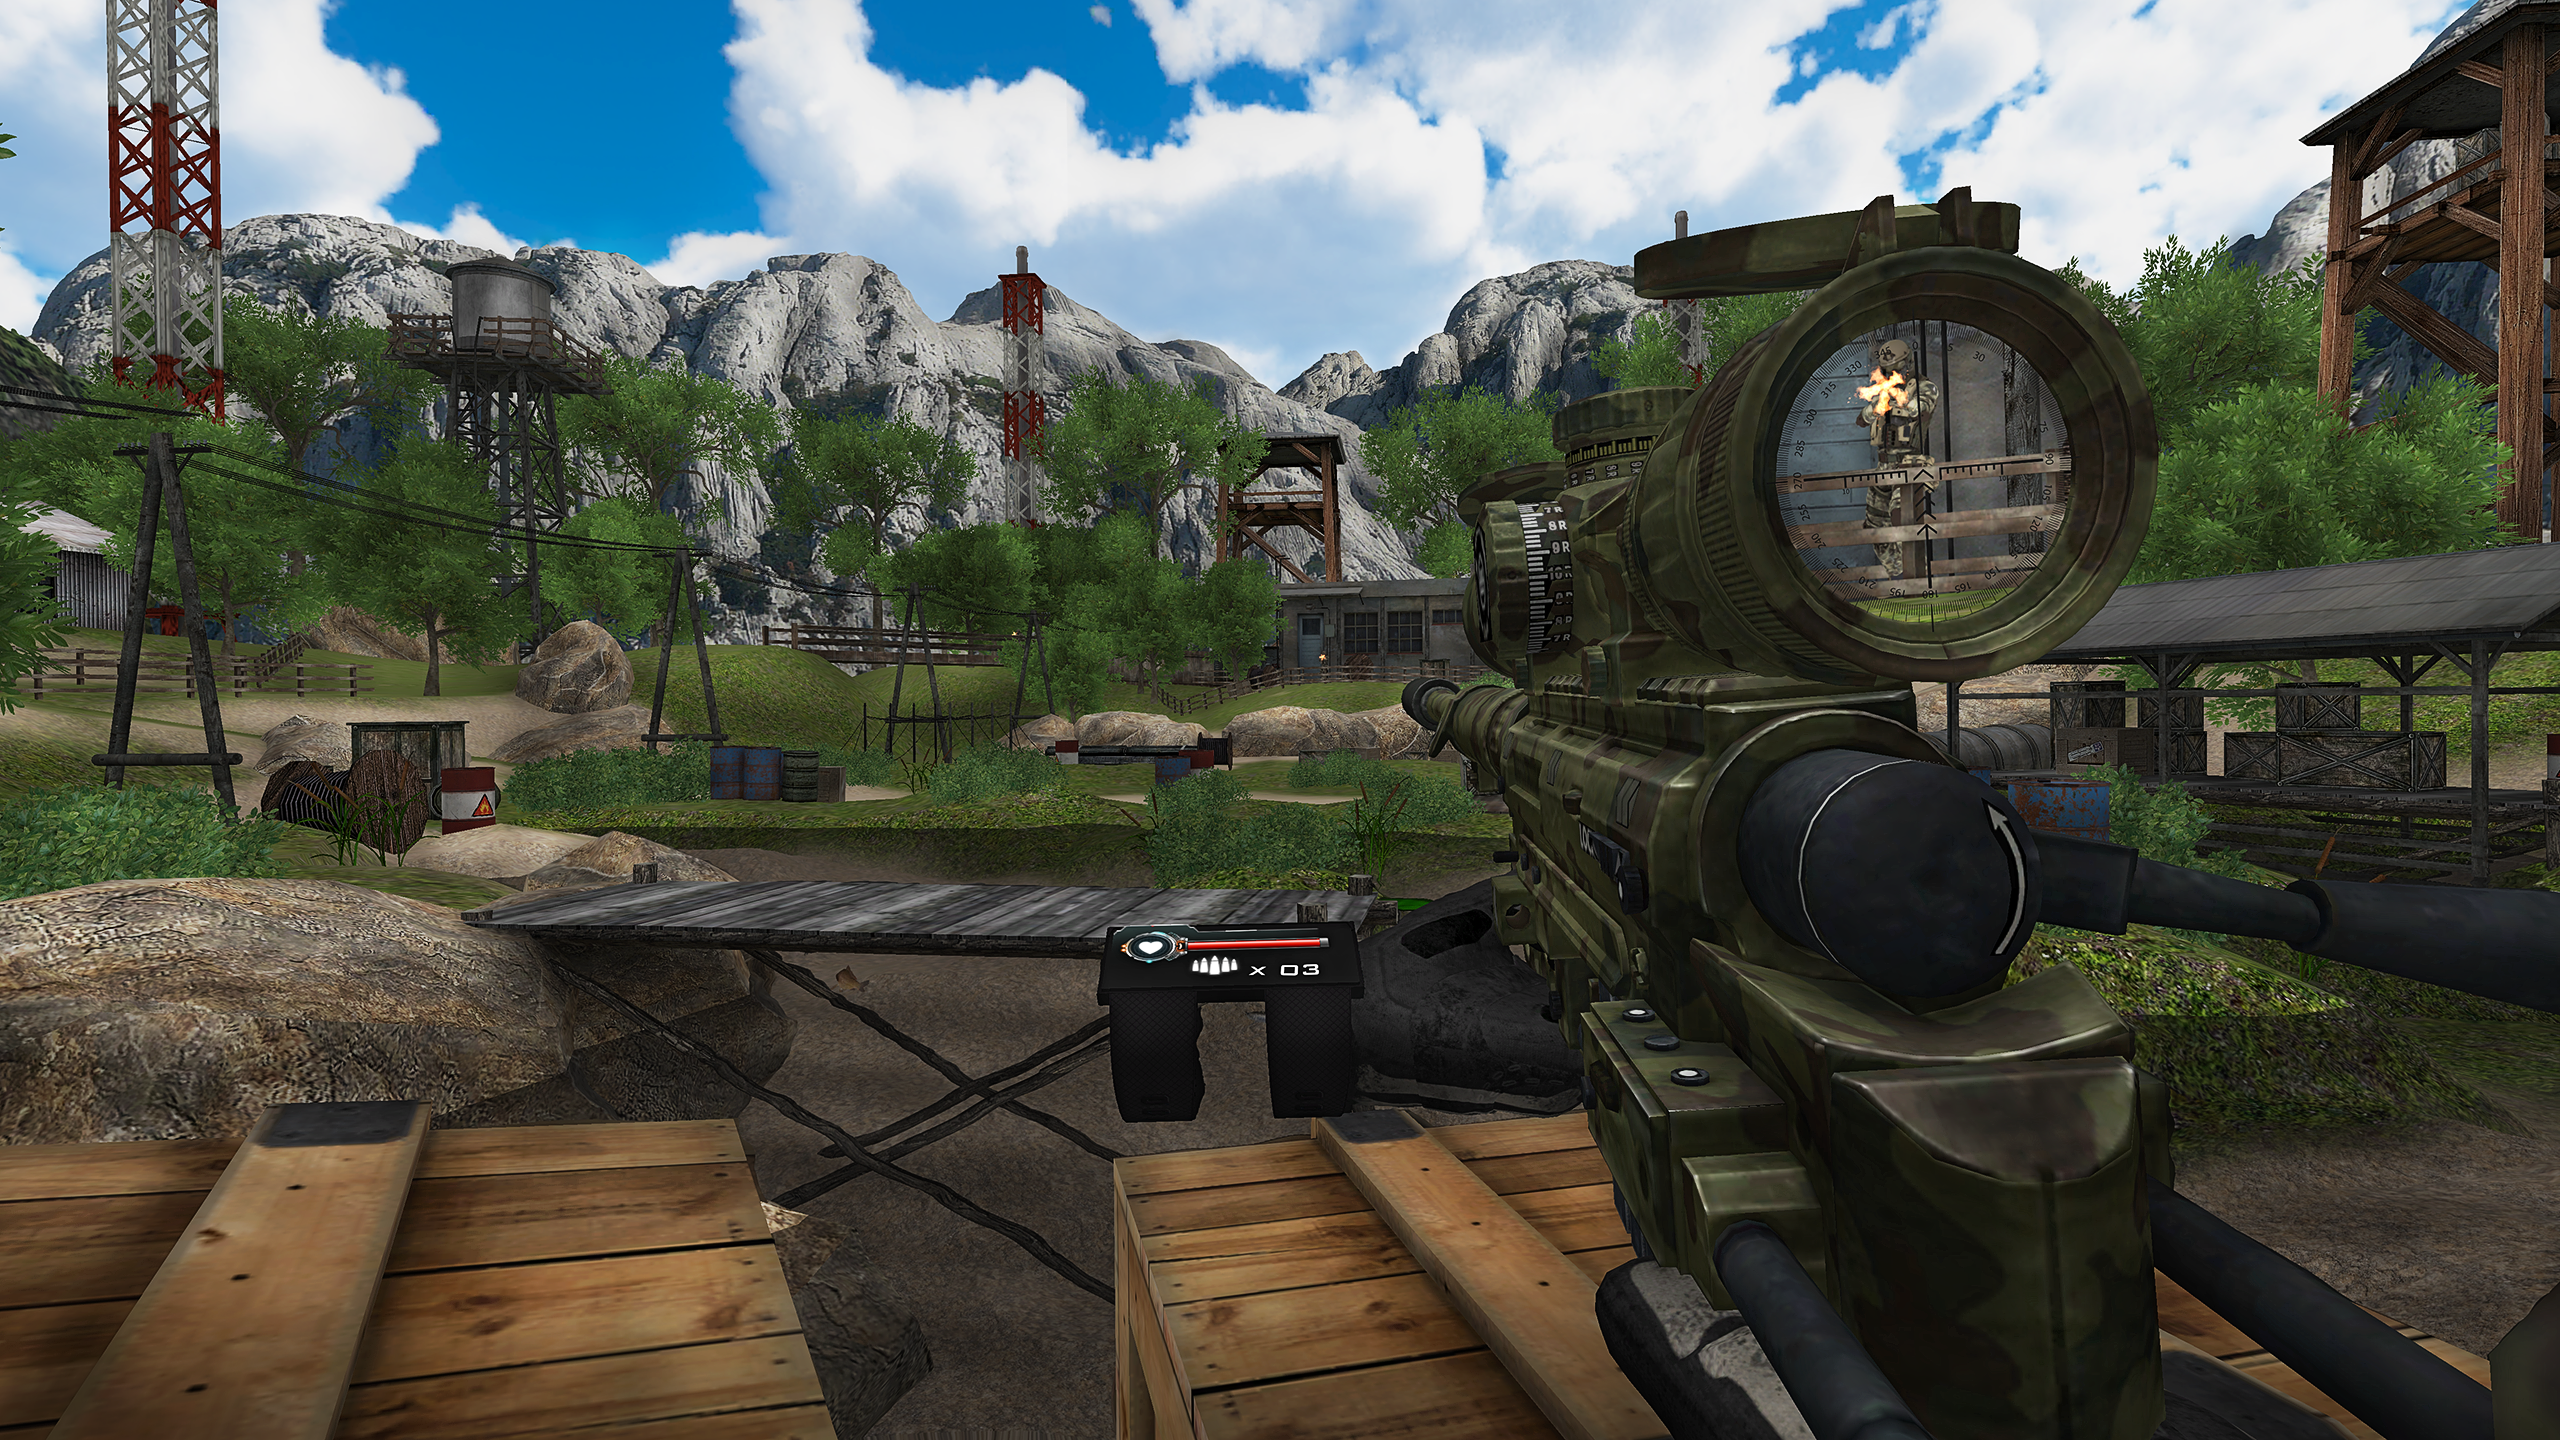 SniperRust VR screenshot 06 - Sniper Rust VR